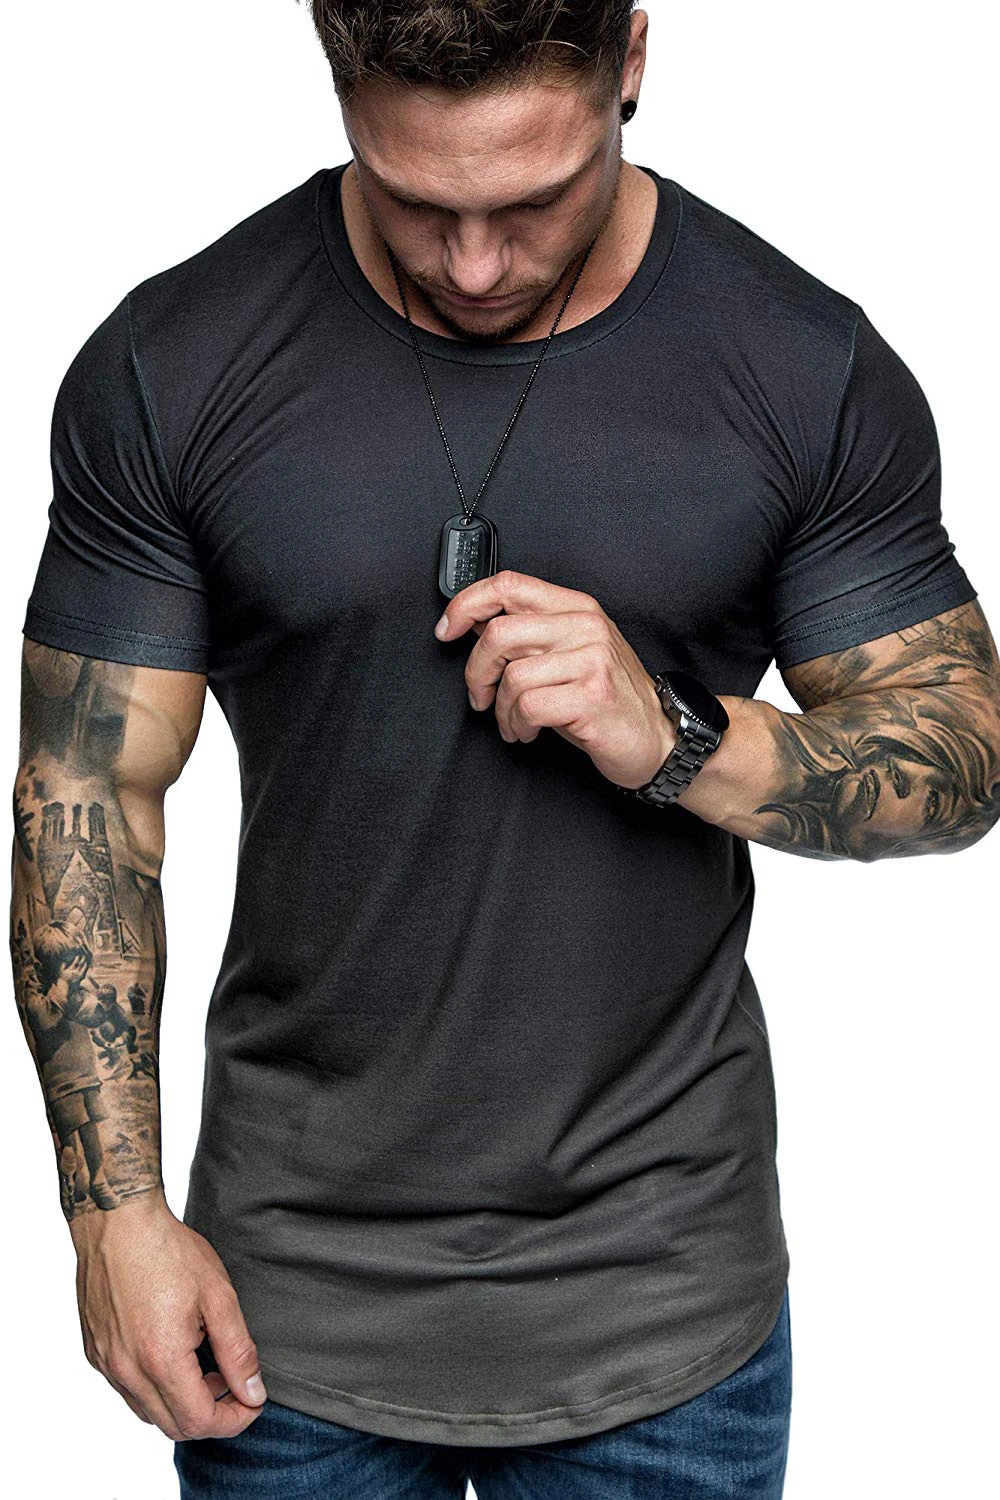 SSYUNO Men Hipster Hip Hop Elong Longline Crewneck T-Shirt Muscle Cotton Casual Tops Slim Fit Blouse Shirts 